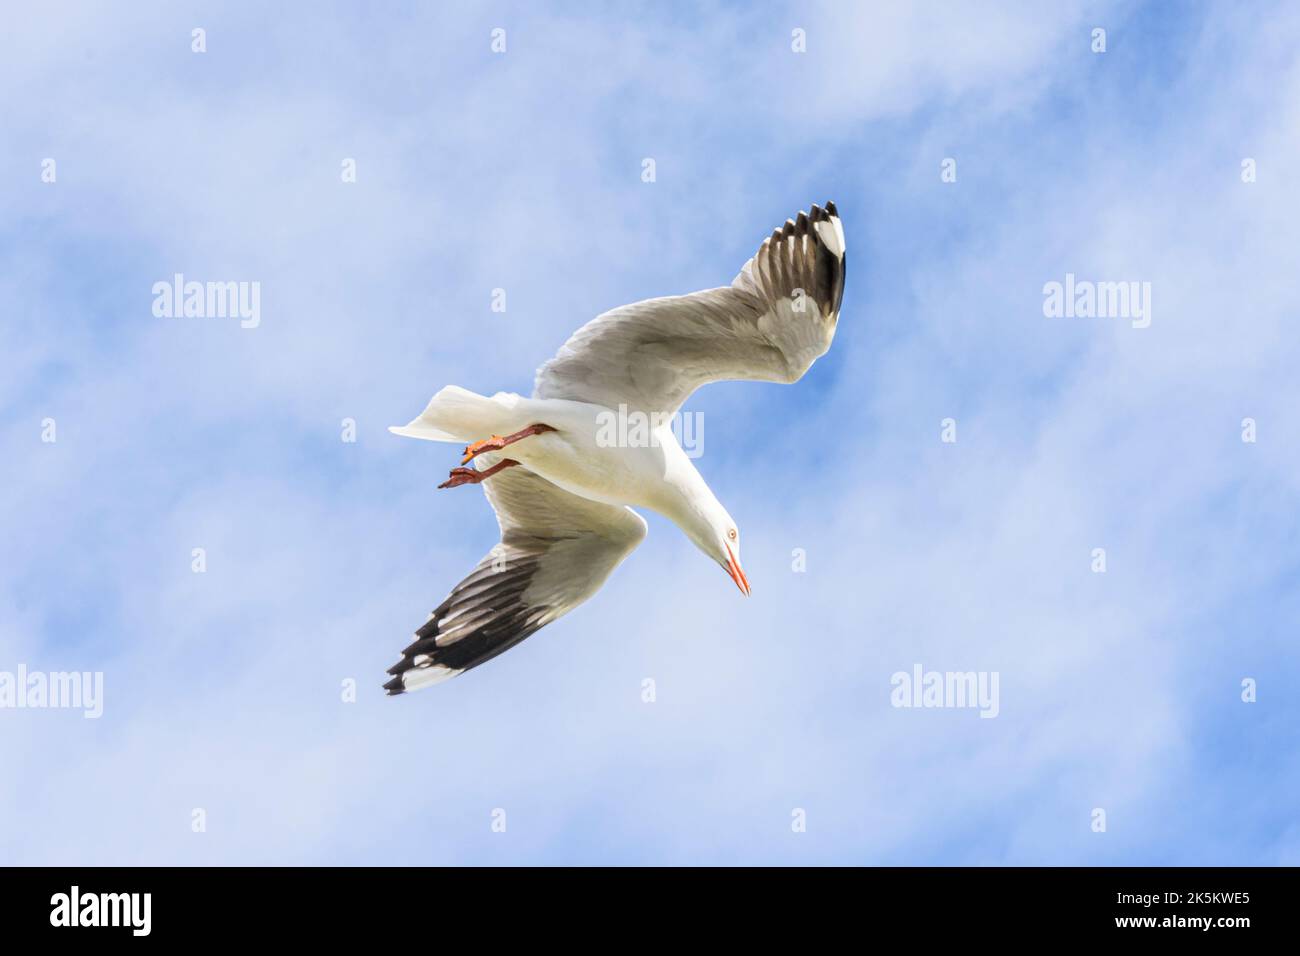 A Silver Gull Seagull in flight off Western Australia Stock Photo